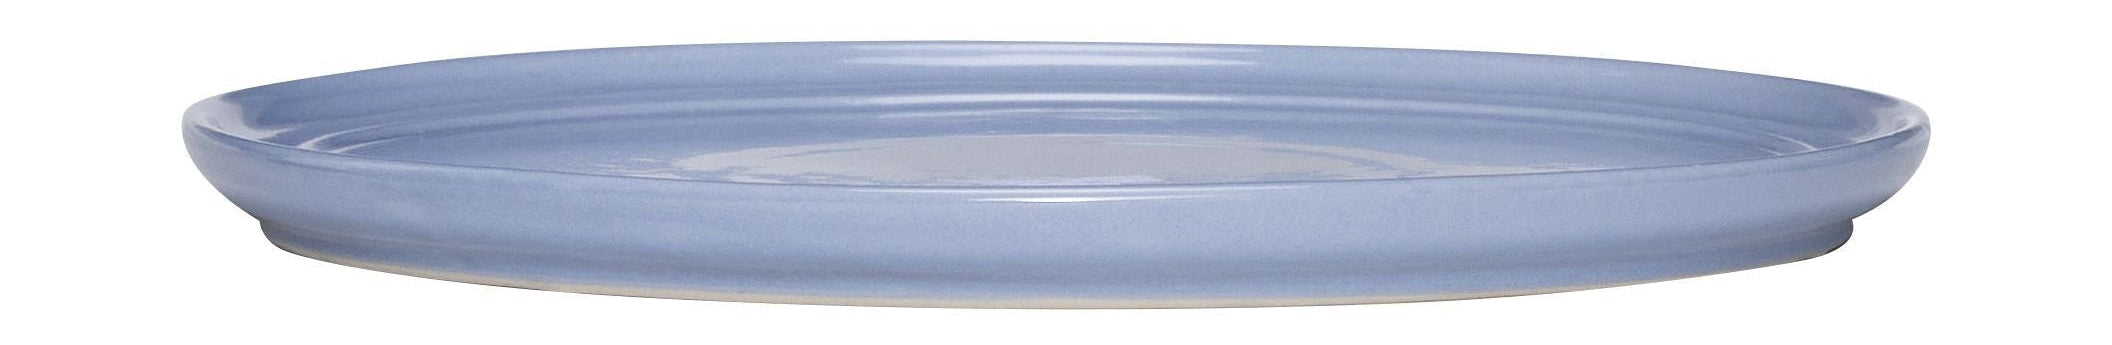 Hübsch Amare Drinel Plate, světle modrá